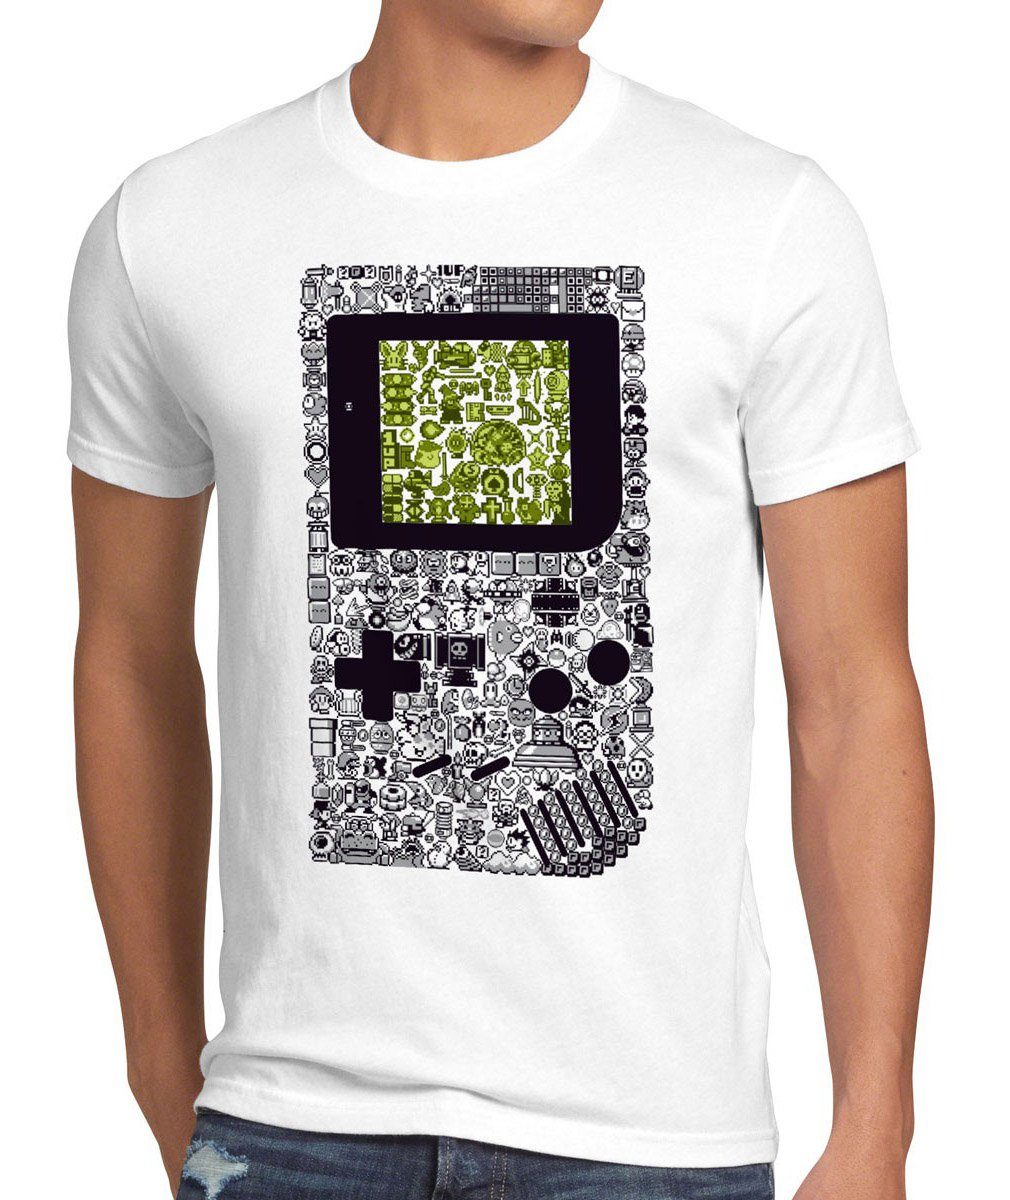 style3 Print-Shirt Herren switch color boy classic retro gaming 8Bit nes T-Shirt T-Shirt Gamer wii luigi n64 yoshi weiß